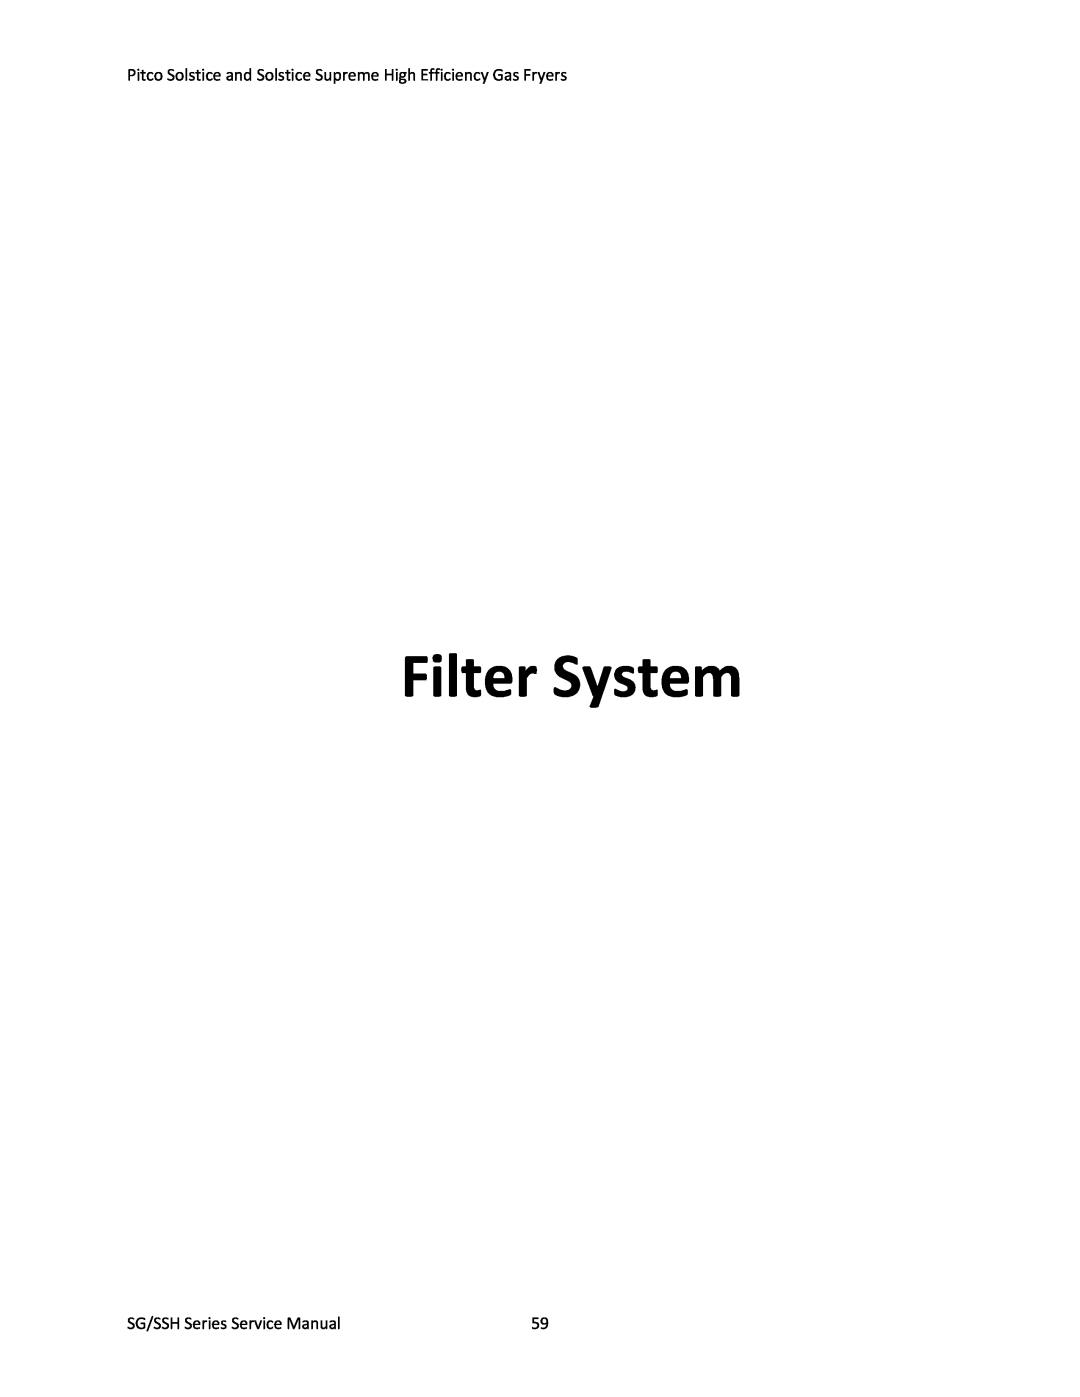 Pitco Frialator L22-345 manual Filter System, SG/SSH Series Service Manual 